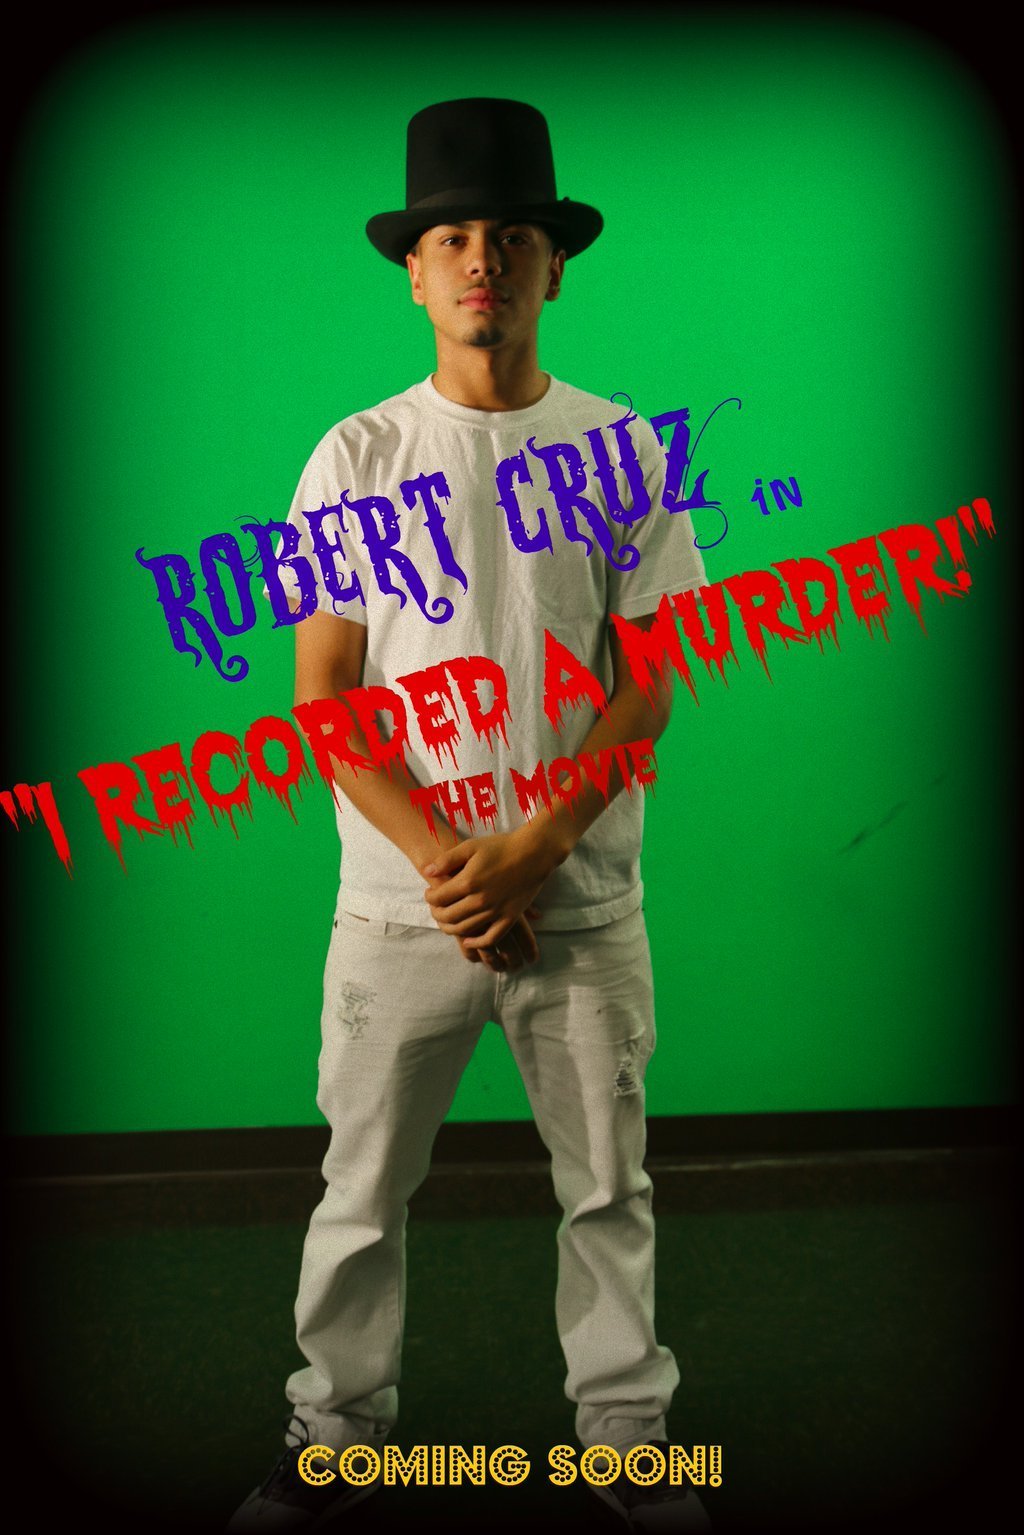 'Robert Cruz' stars in 